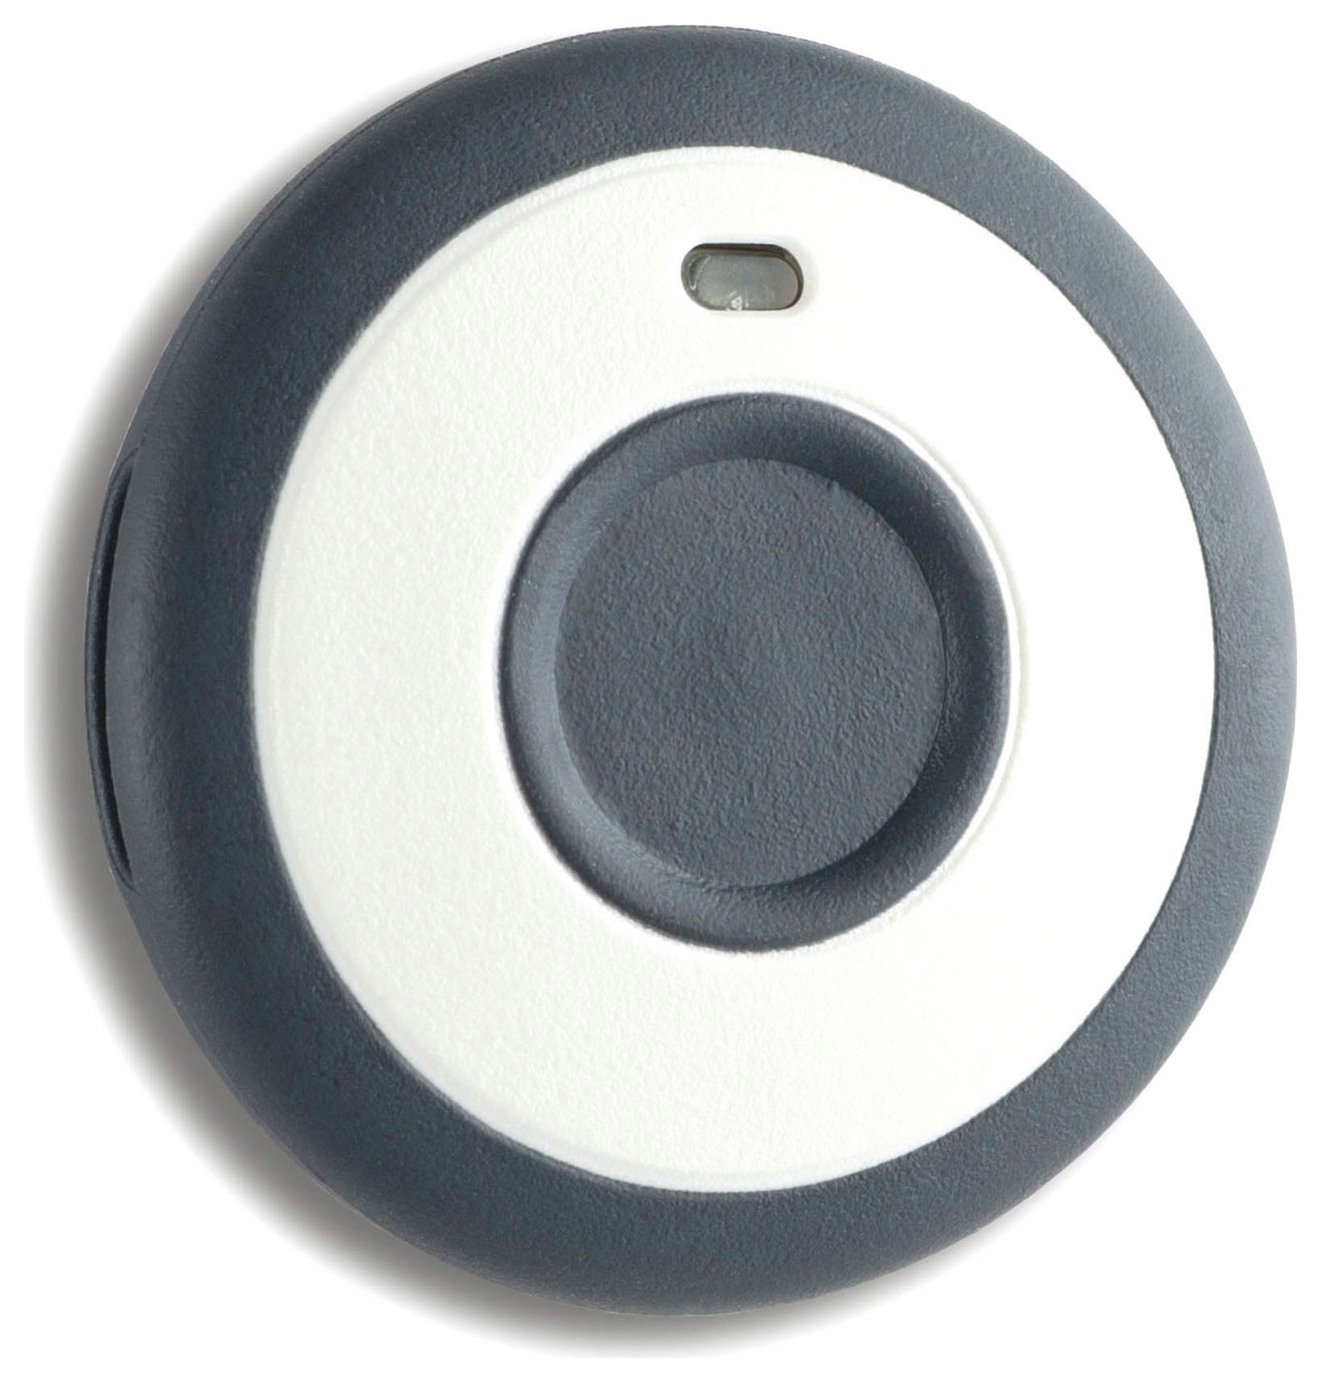 Honeywell Evohome Wireless Panic Alarm Button